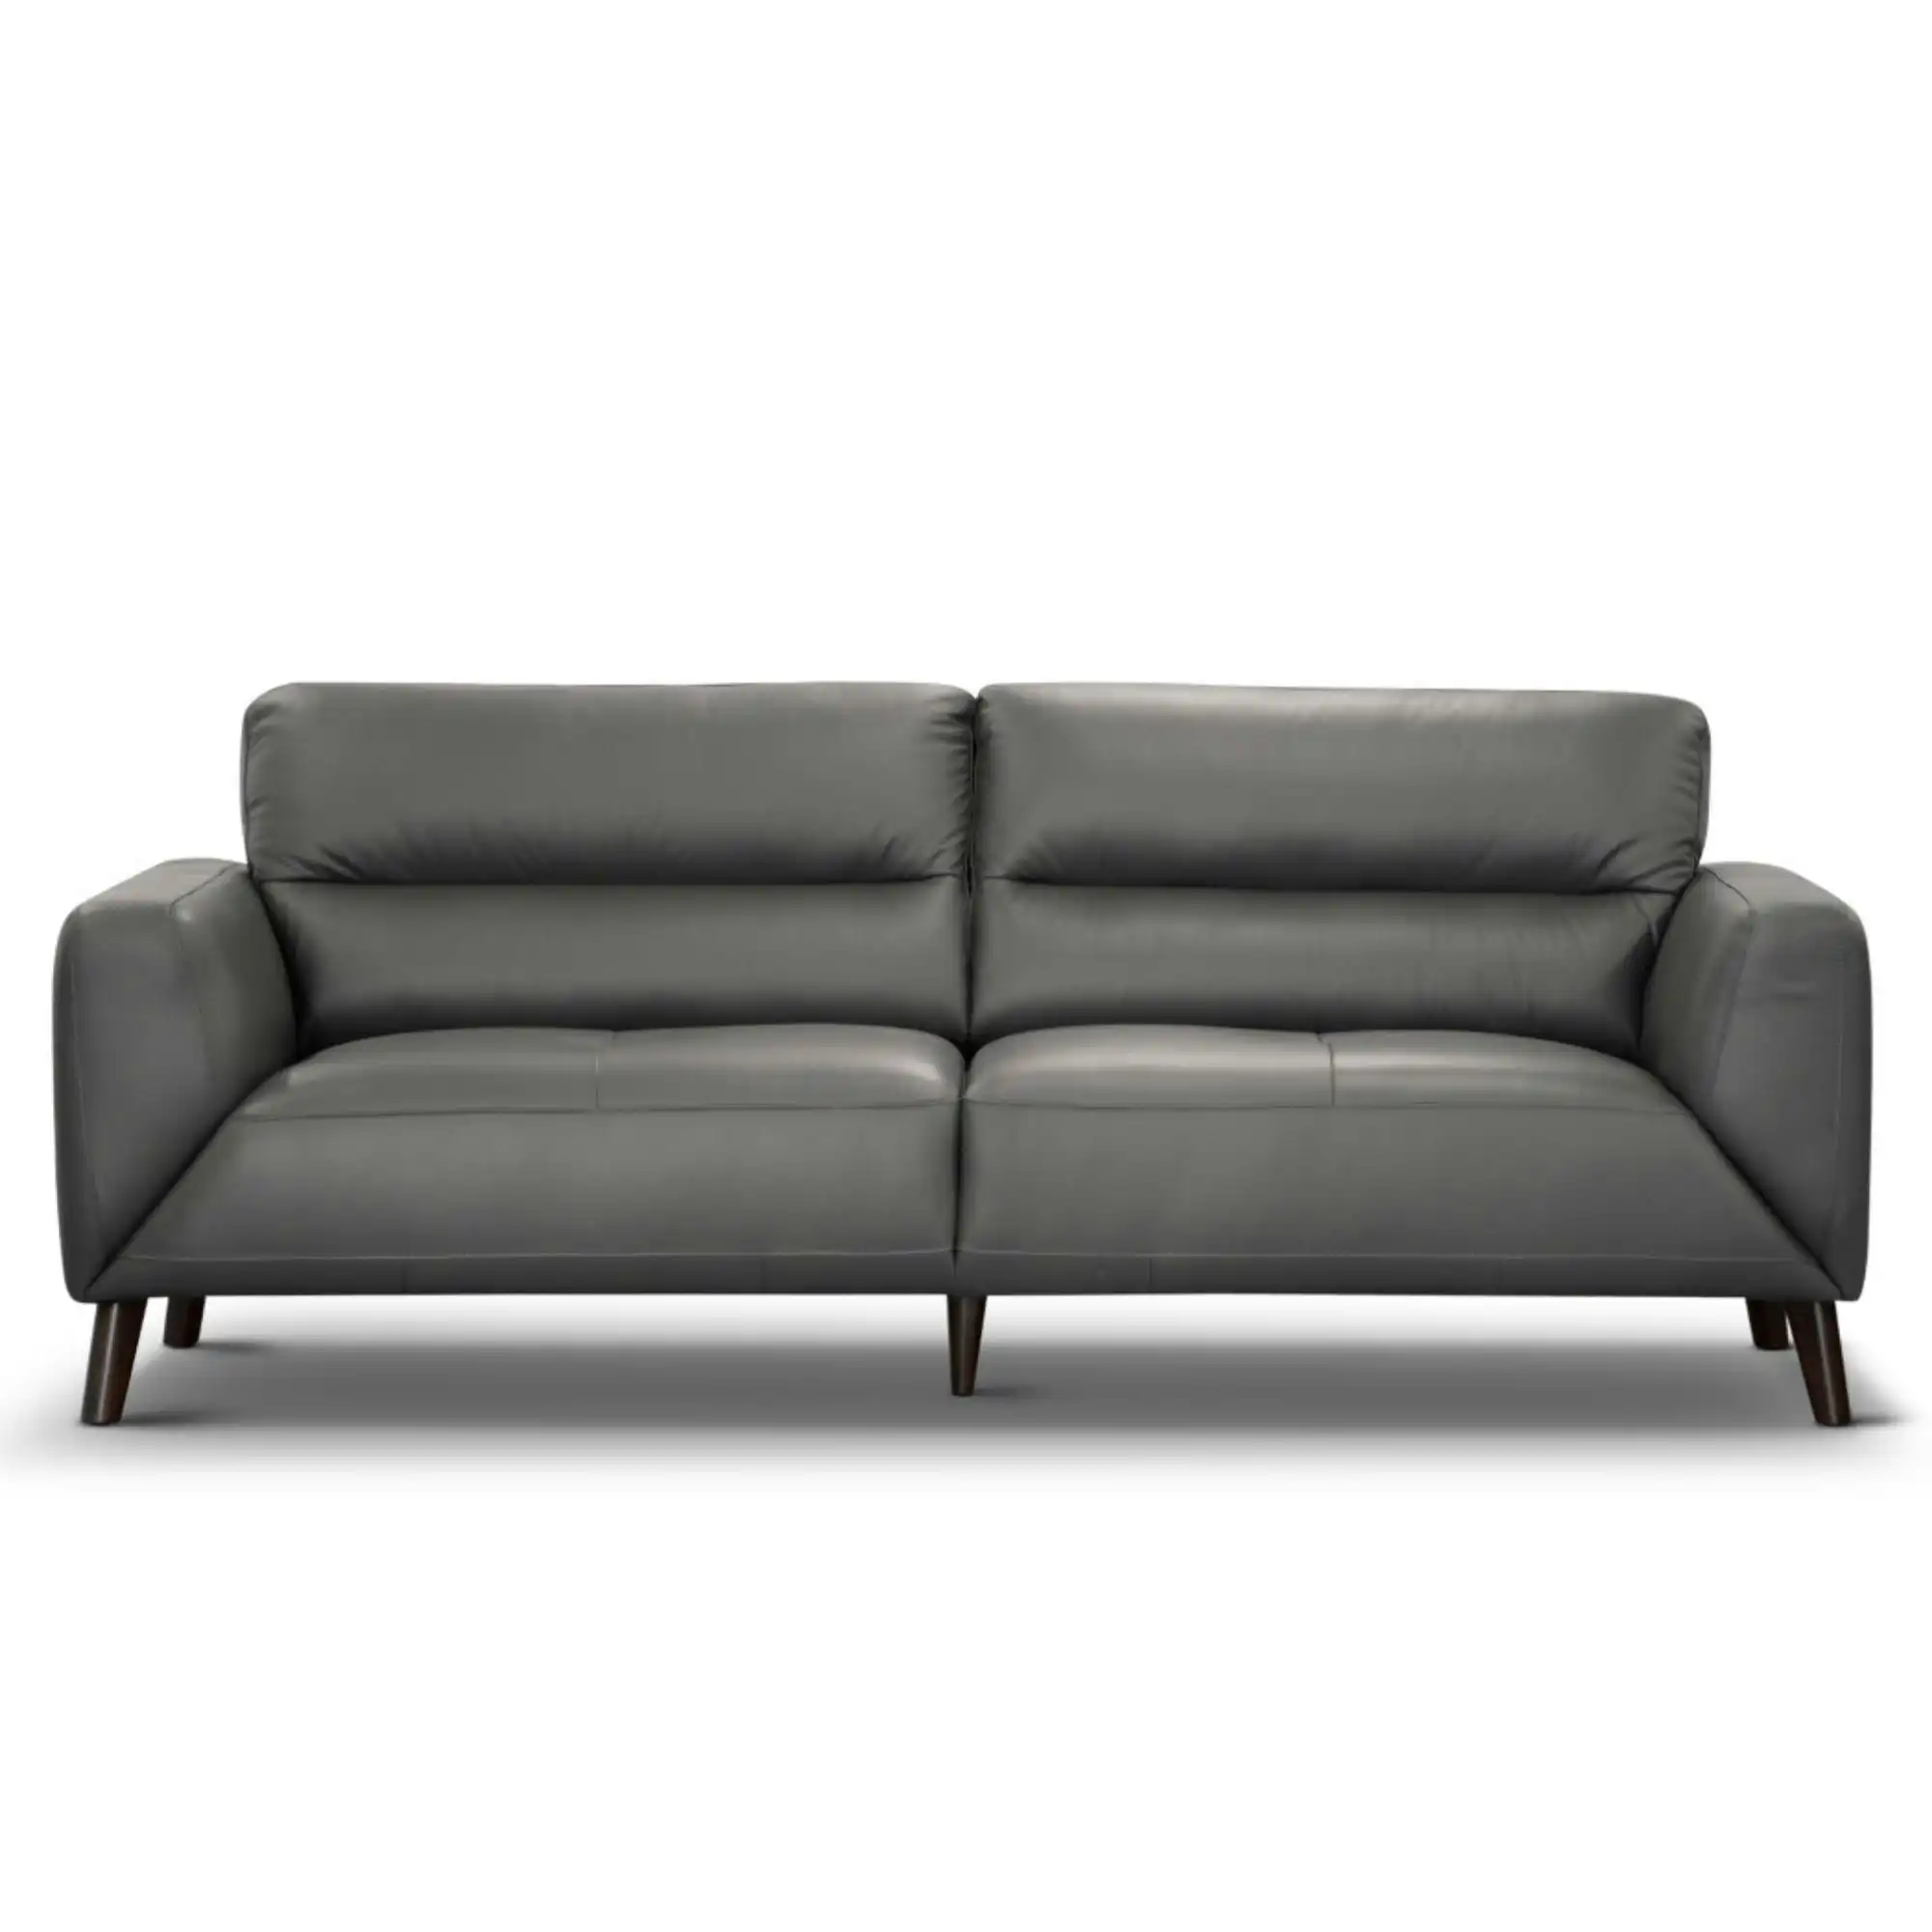 Downy Leather Sofa